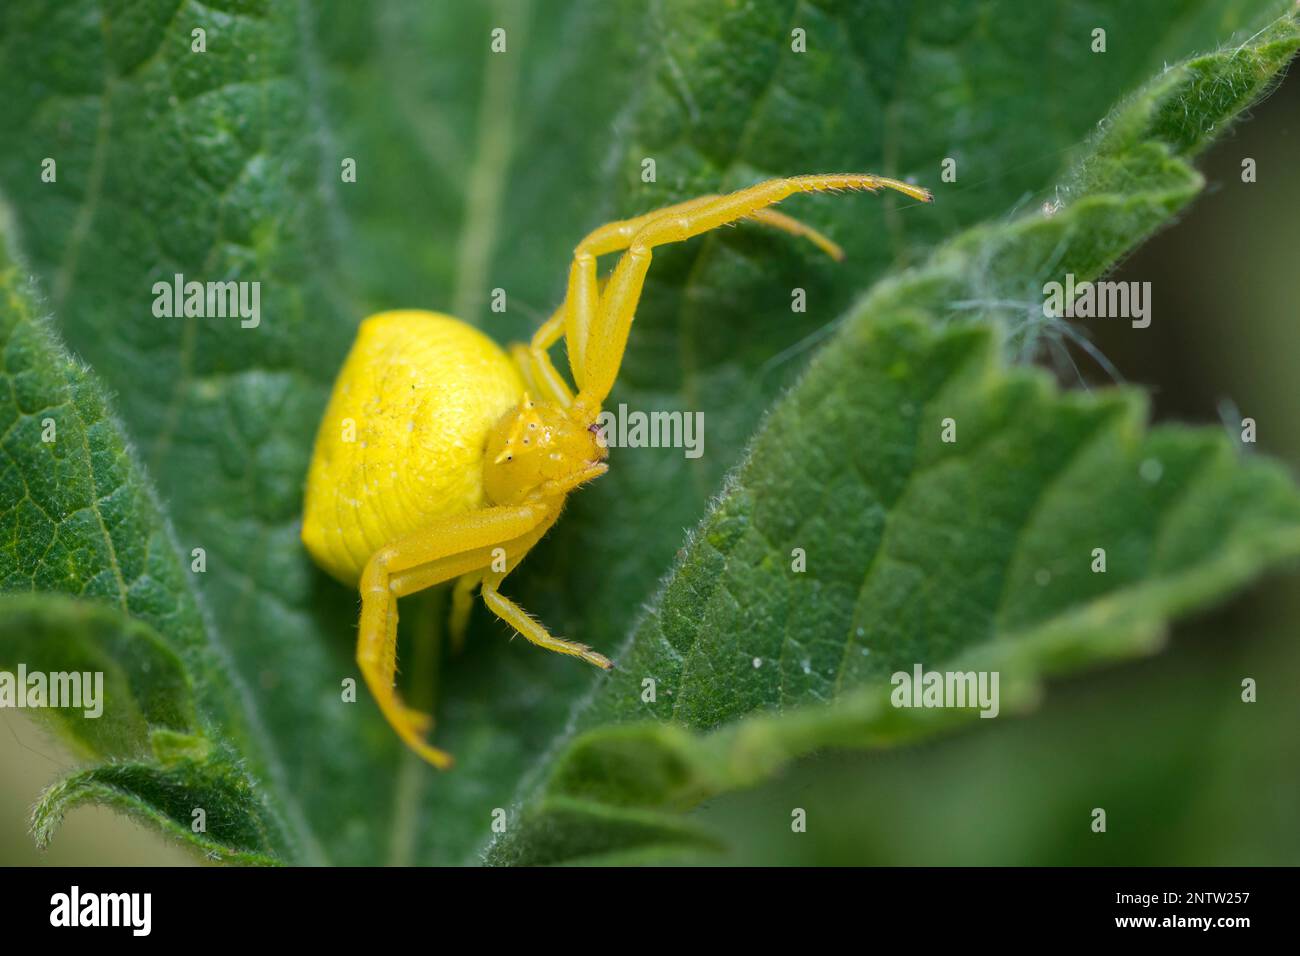 Yellow Goldenrod Crab Spider on a leaf, Misumena Vatia Stock Photo